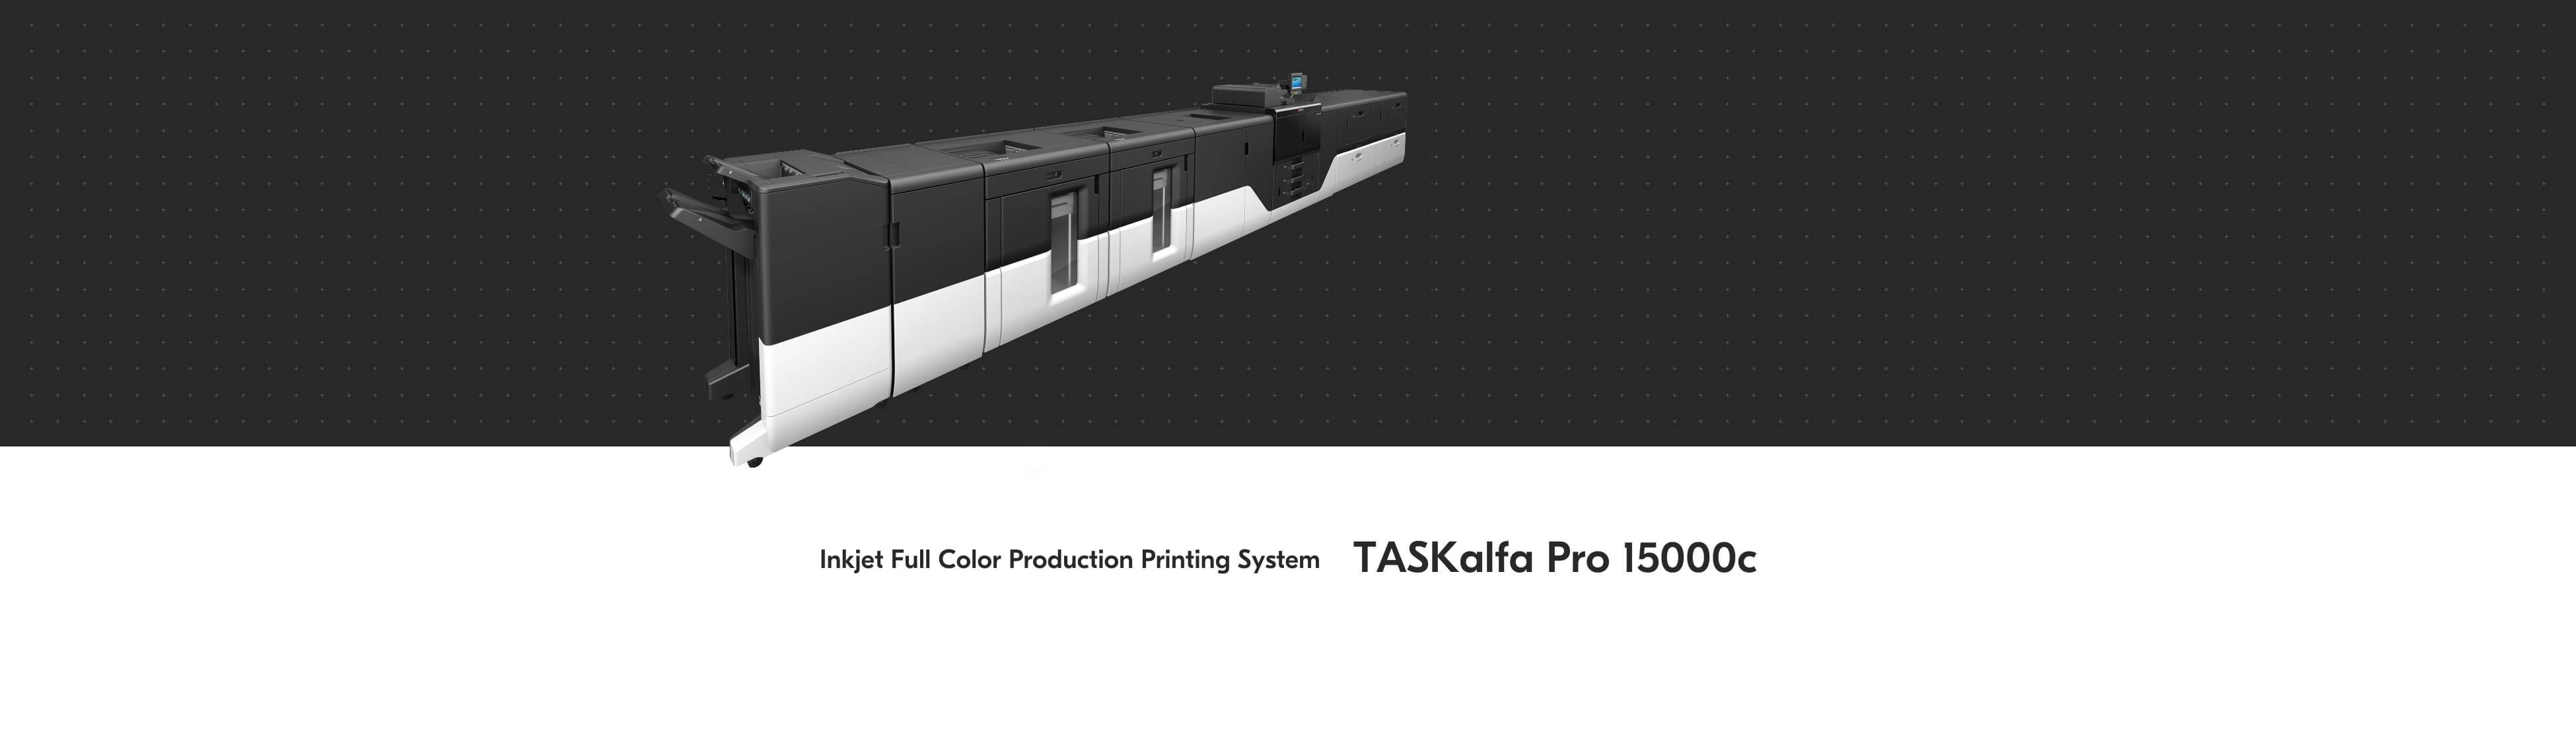 The new TASKalfa Pro 15000c